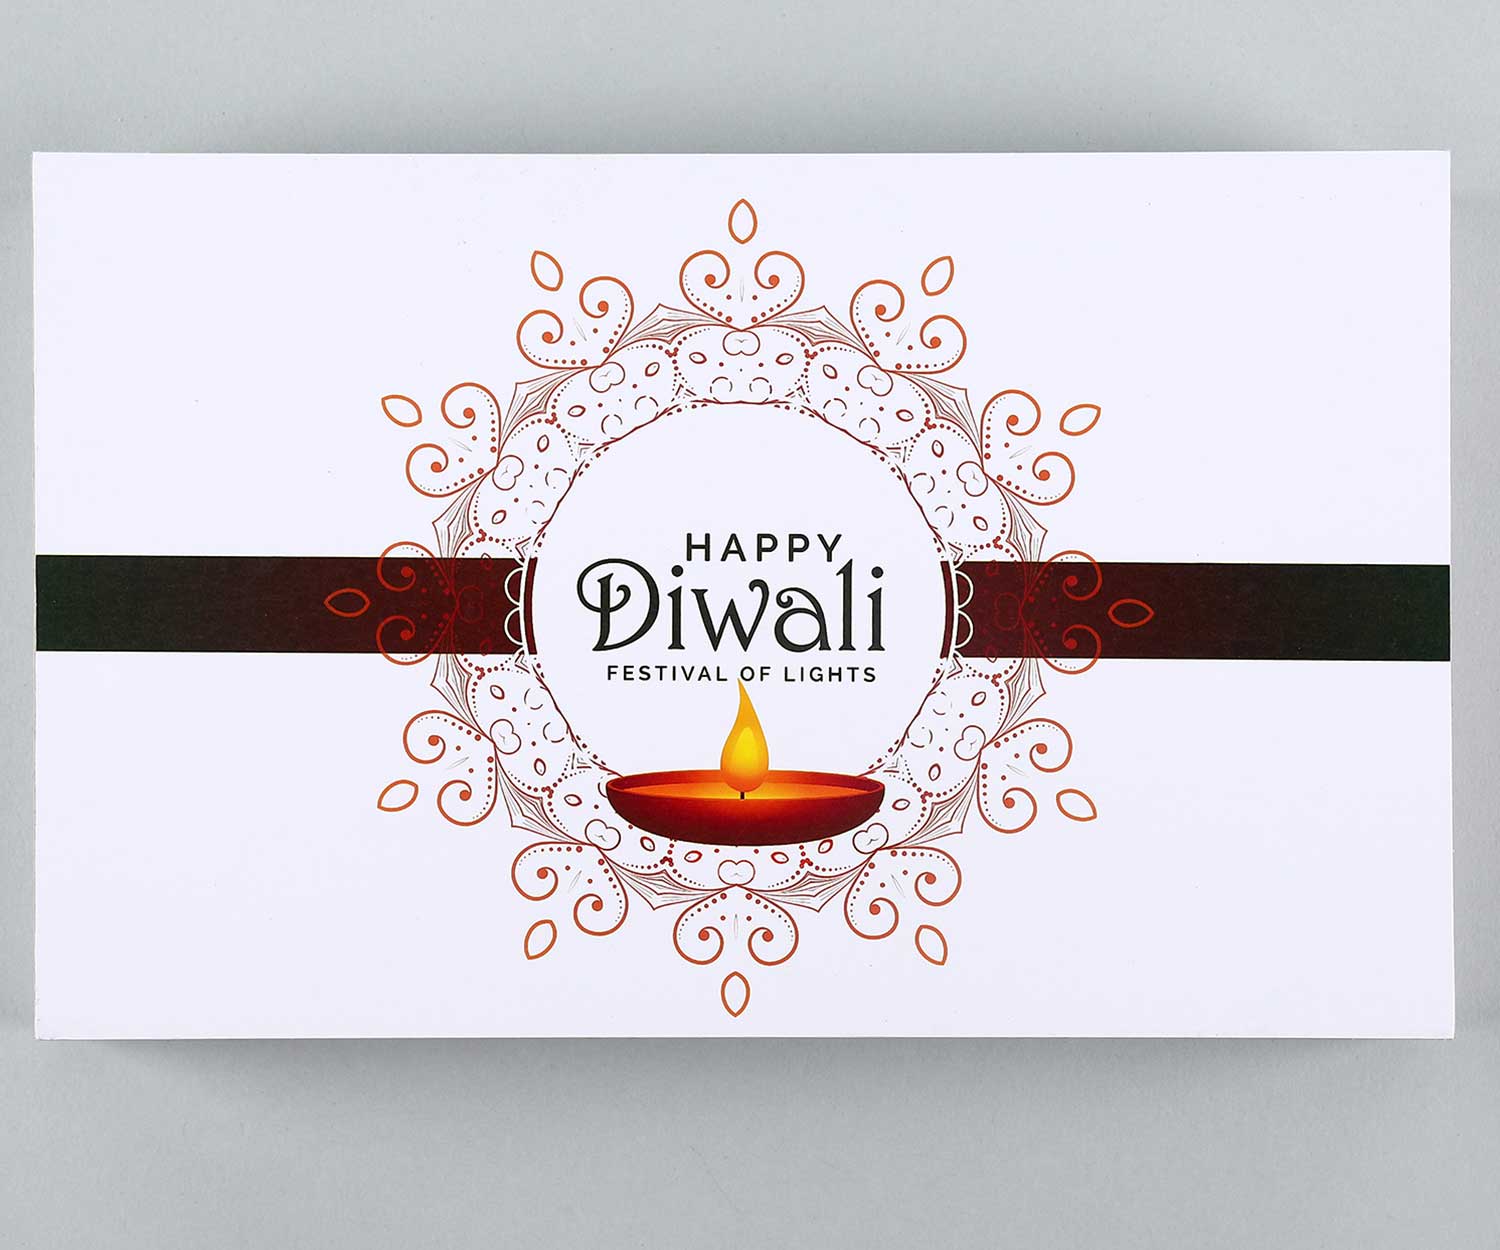 haldiram diwali gift box, phool diwali gift box dry fruits diwali gift box,happy diwali gift box,corporate diwali gift box